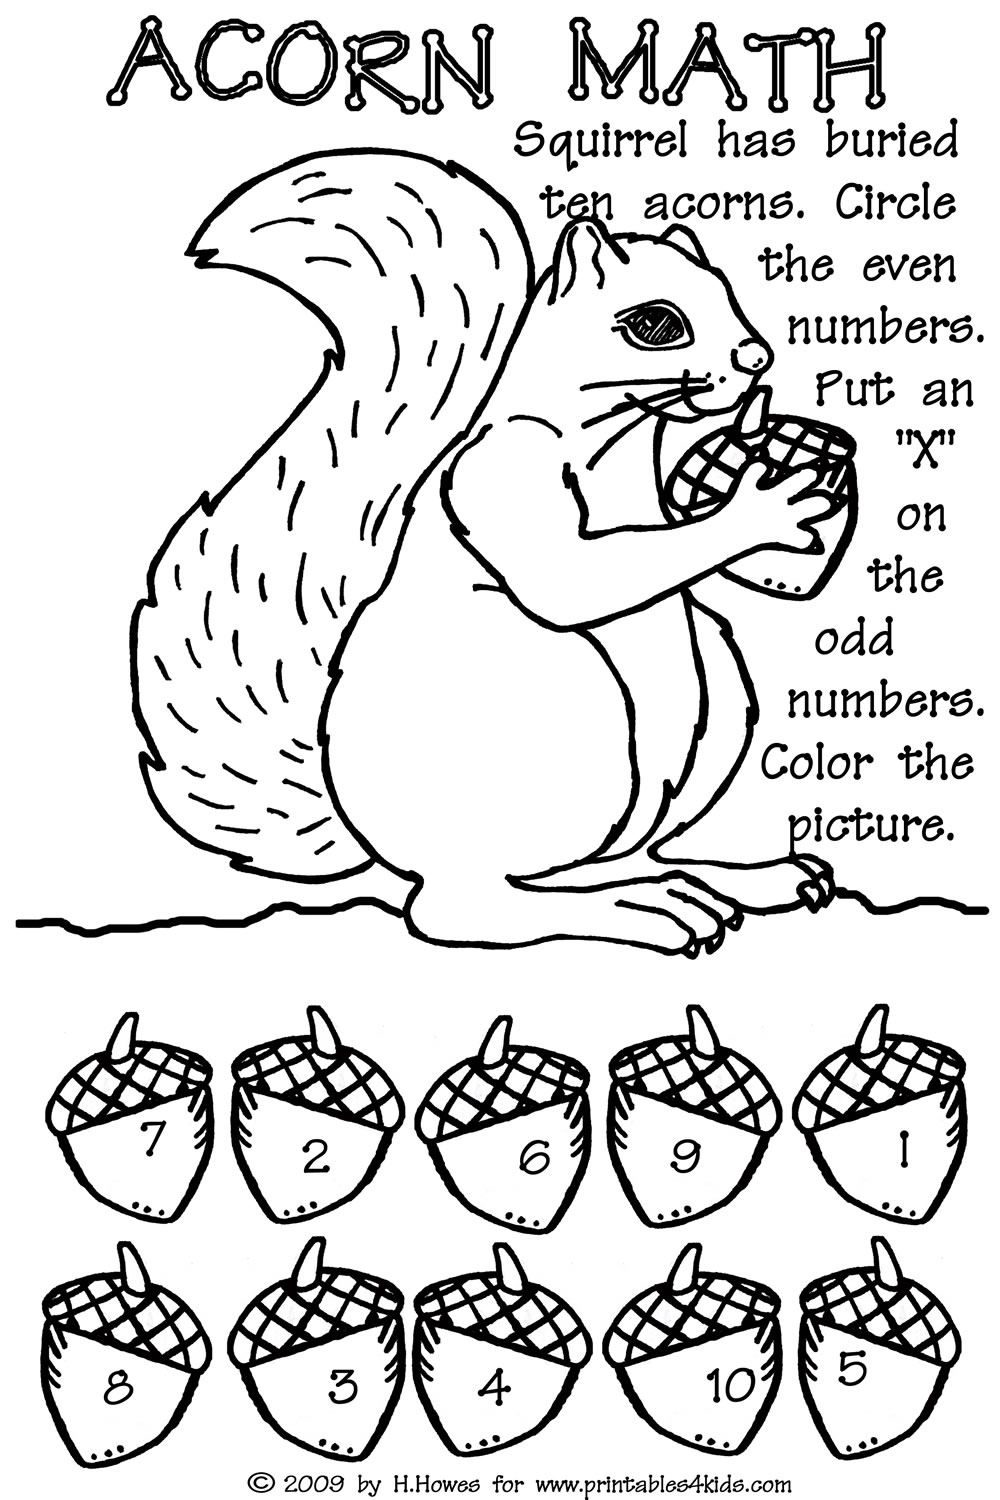 12 Best Images of Patchwork Math Worksheets - Quilt ...